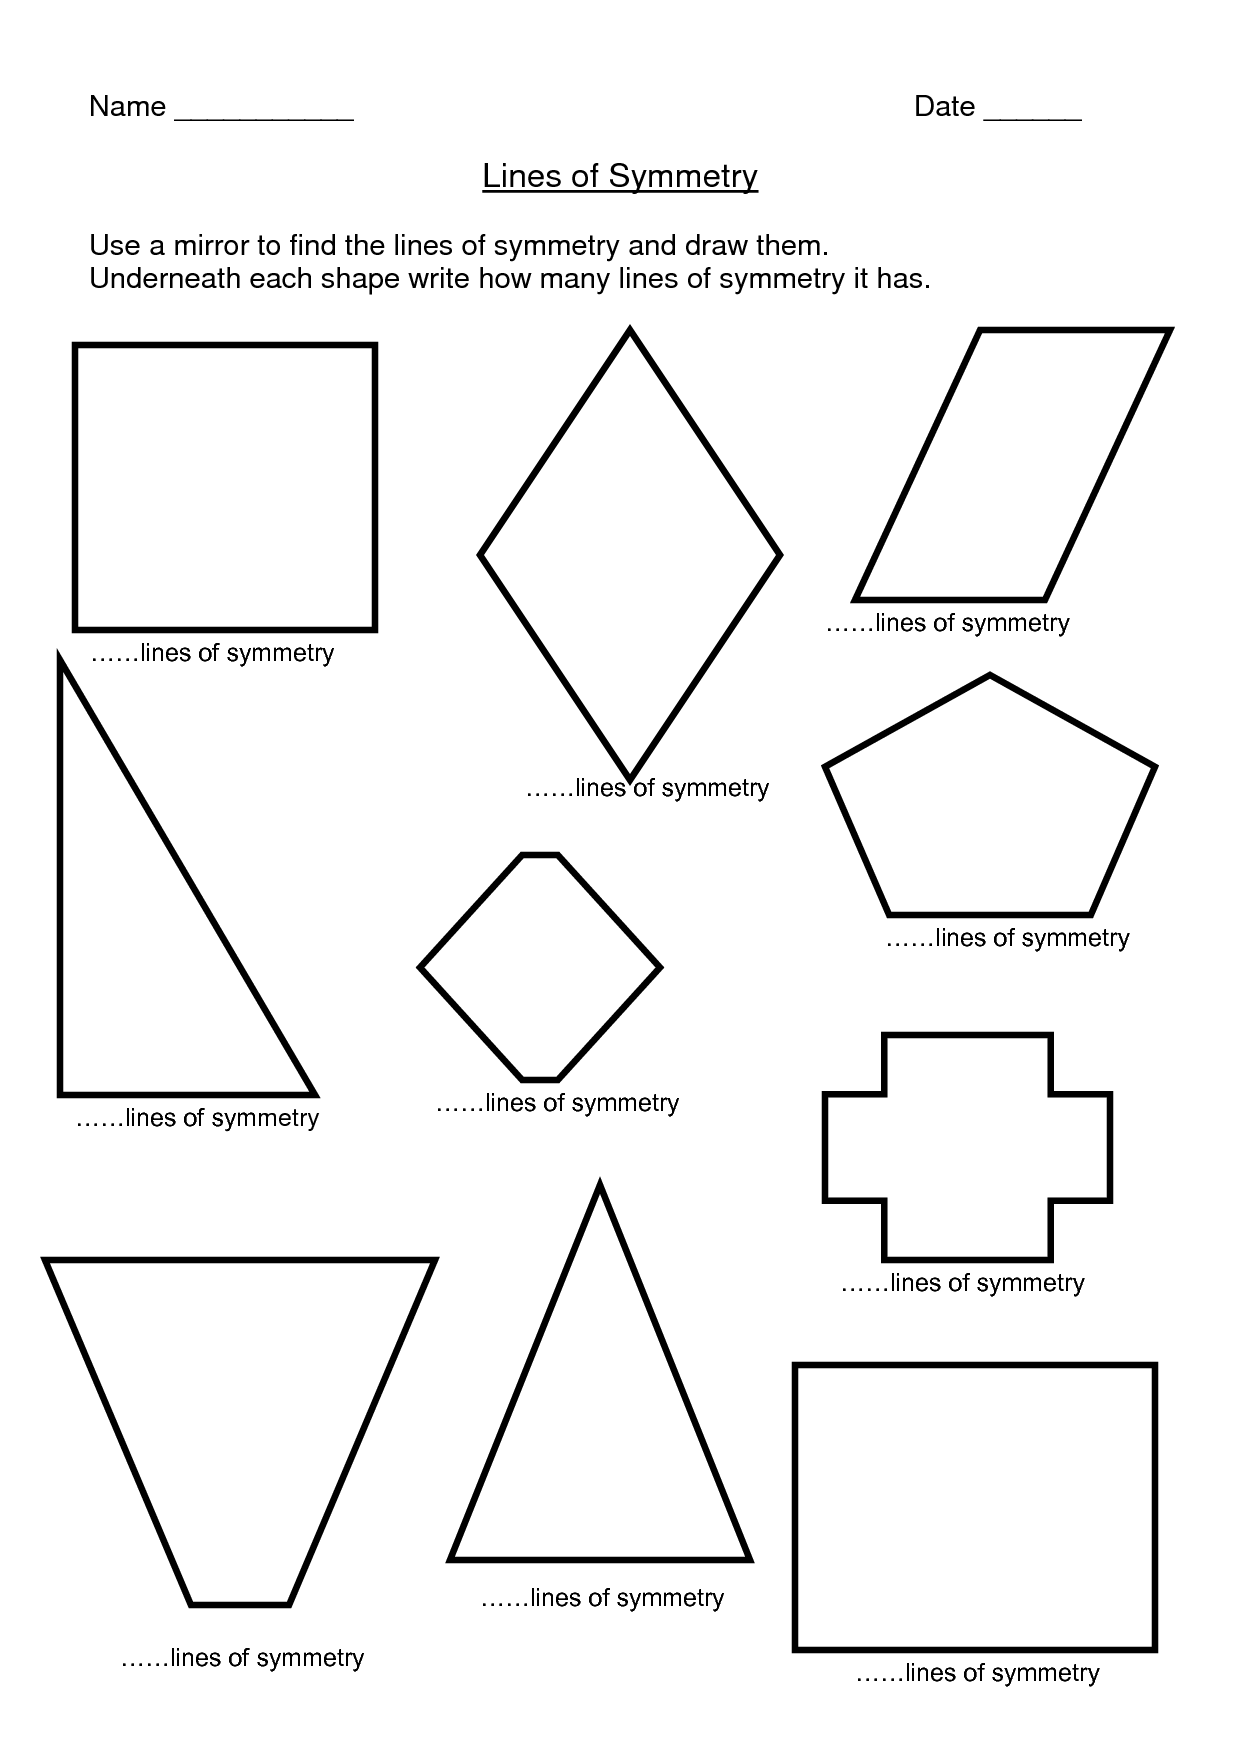 12 Best Images of Symmetrical Shapes Worksheets - Line Symmetry ...